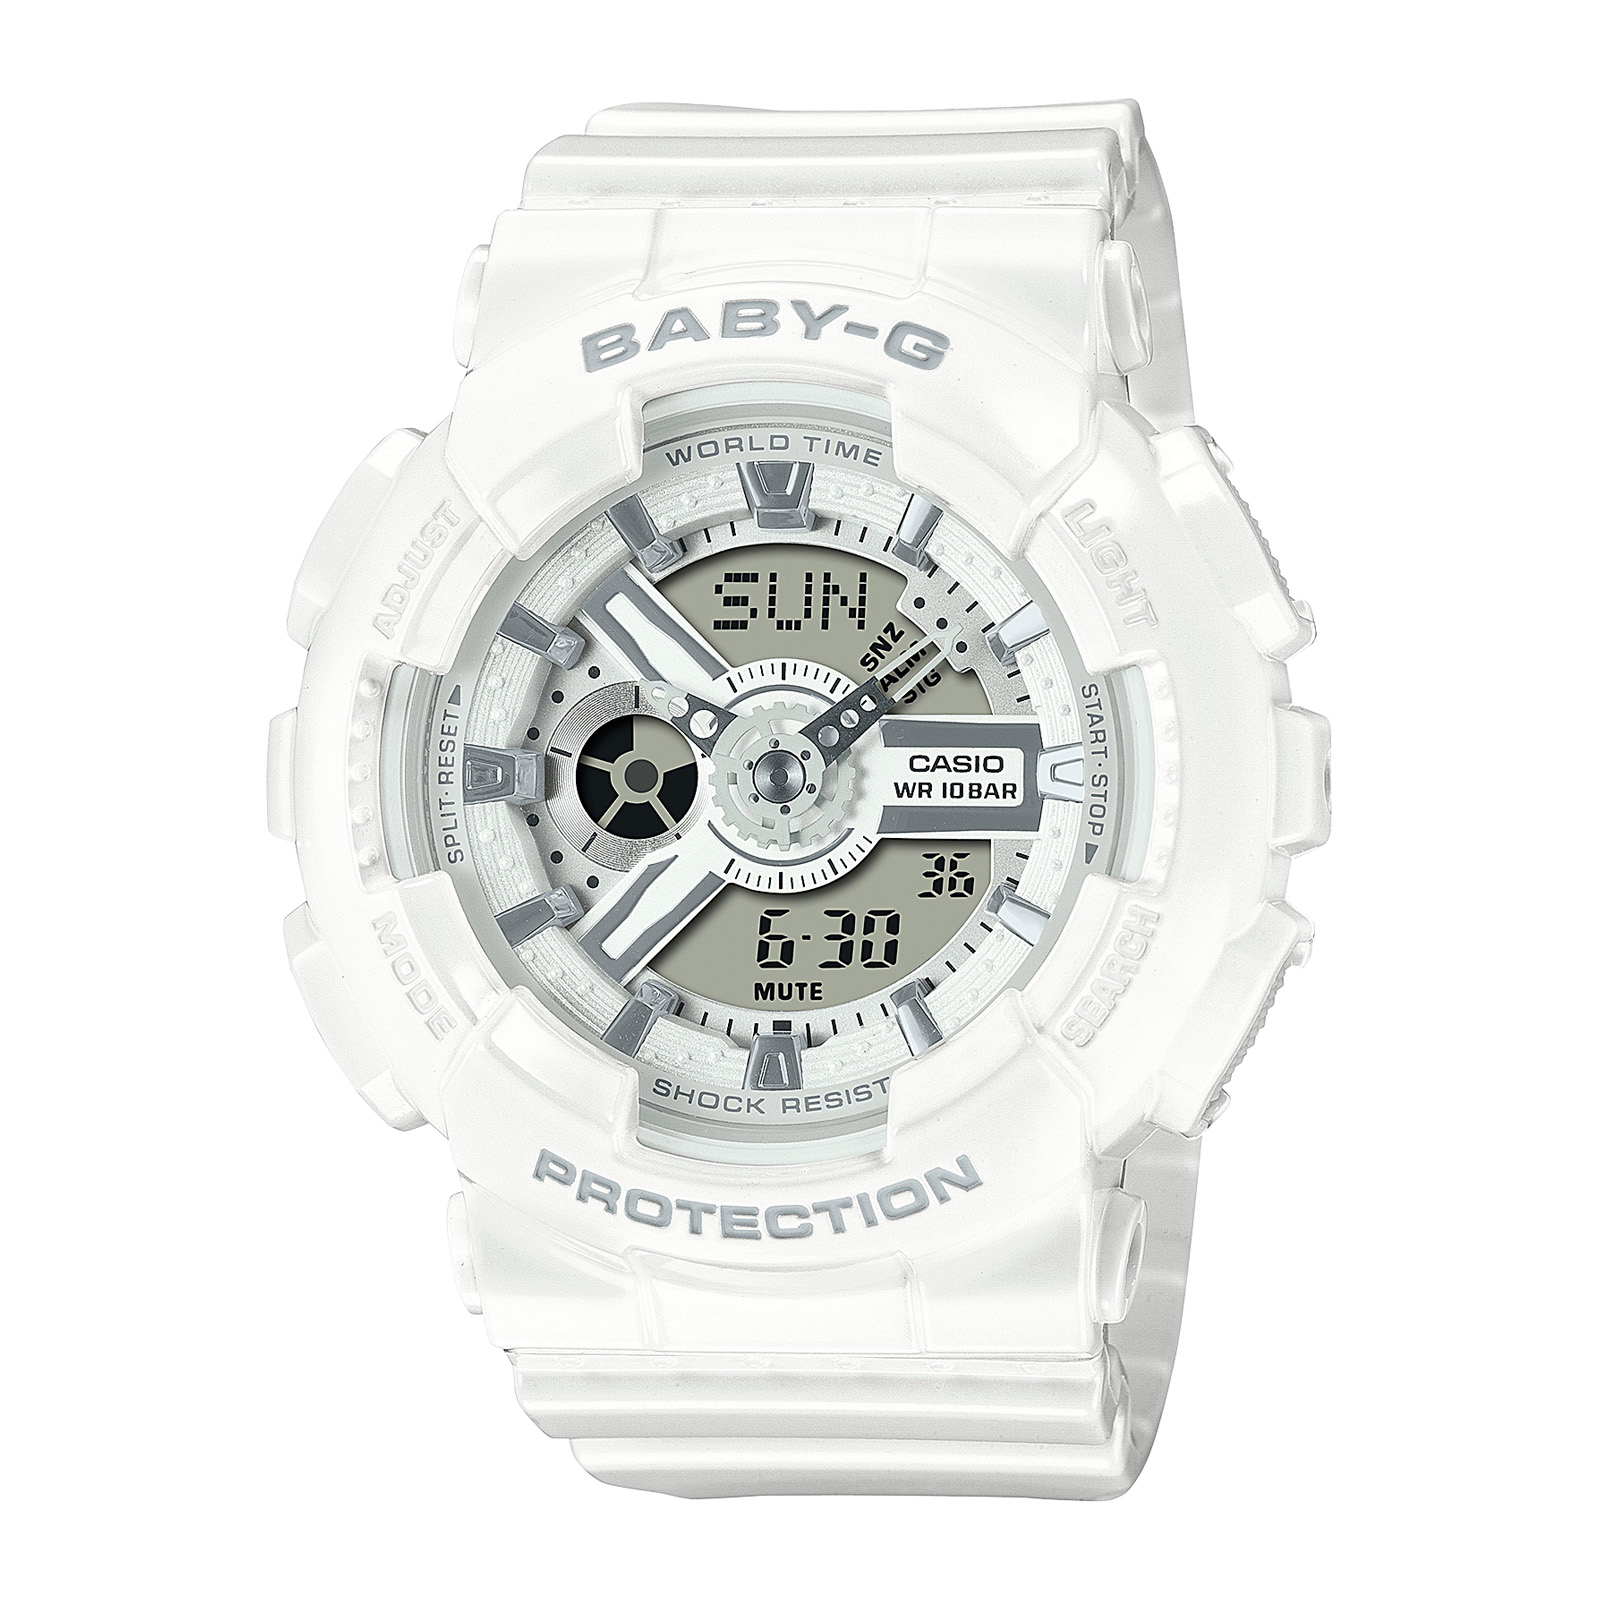 Reloj BABY-G BA-110X-7A3 Resina Mujer Blanco